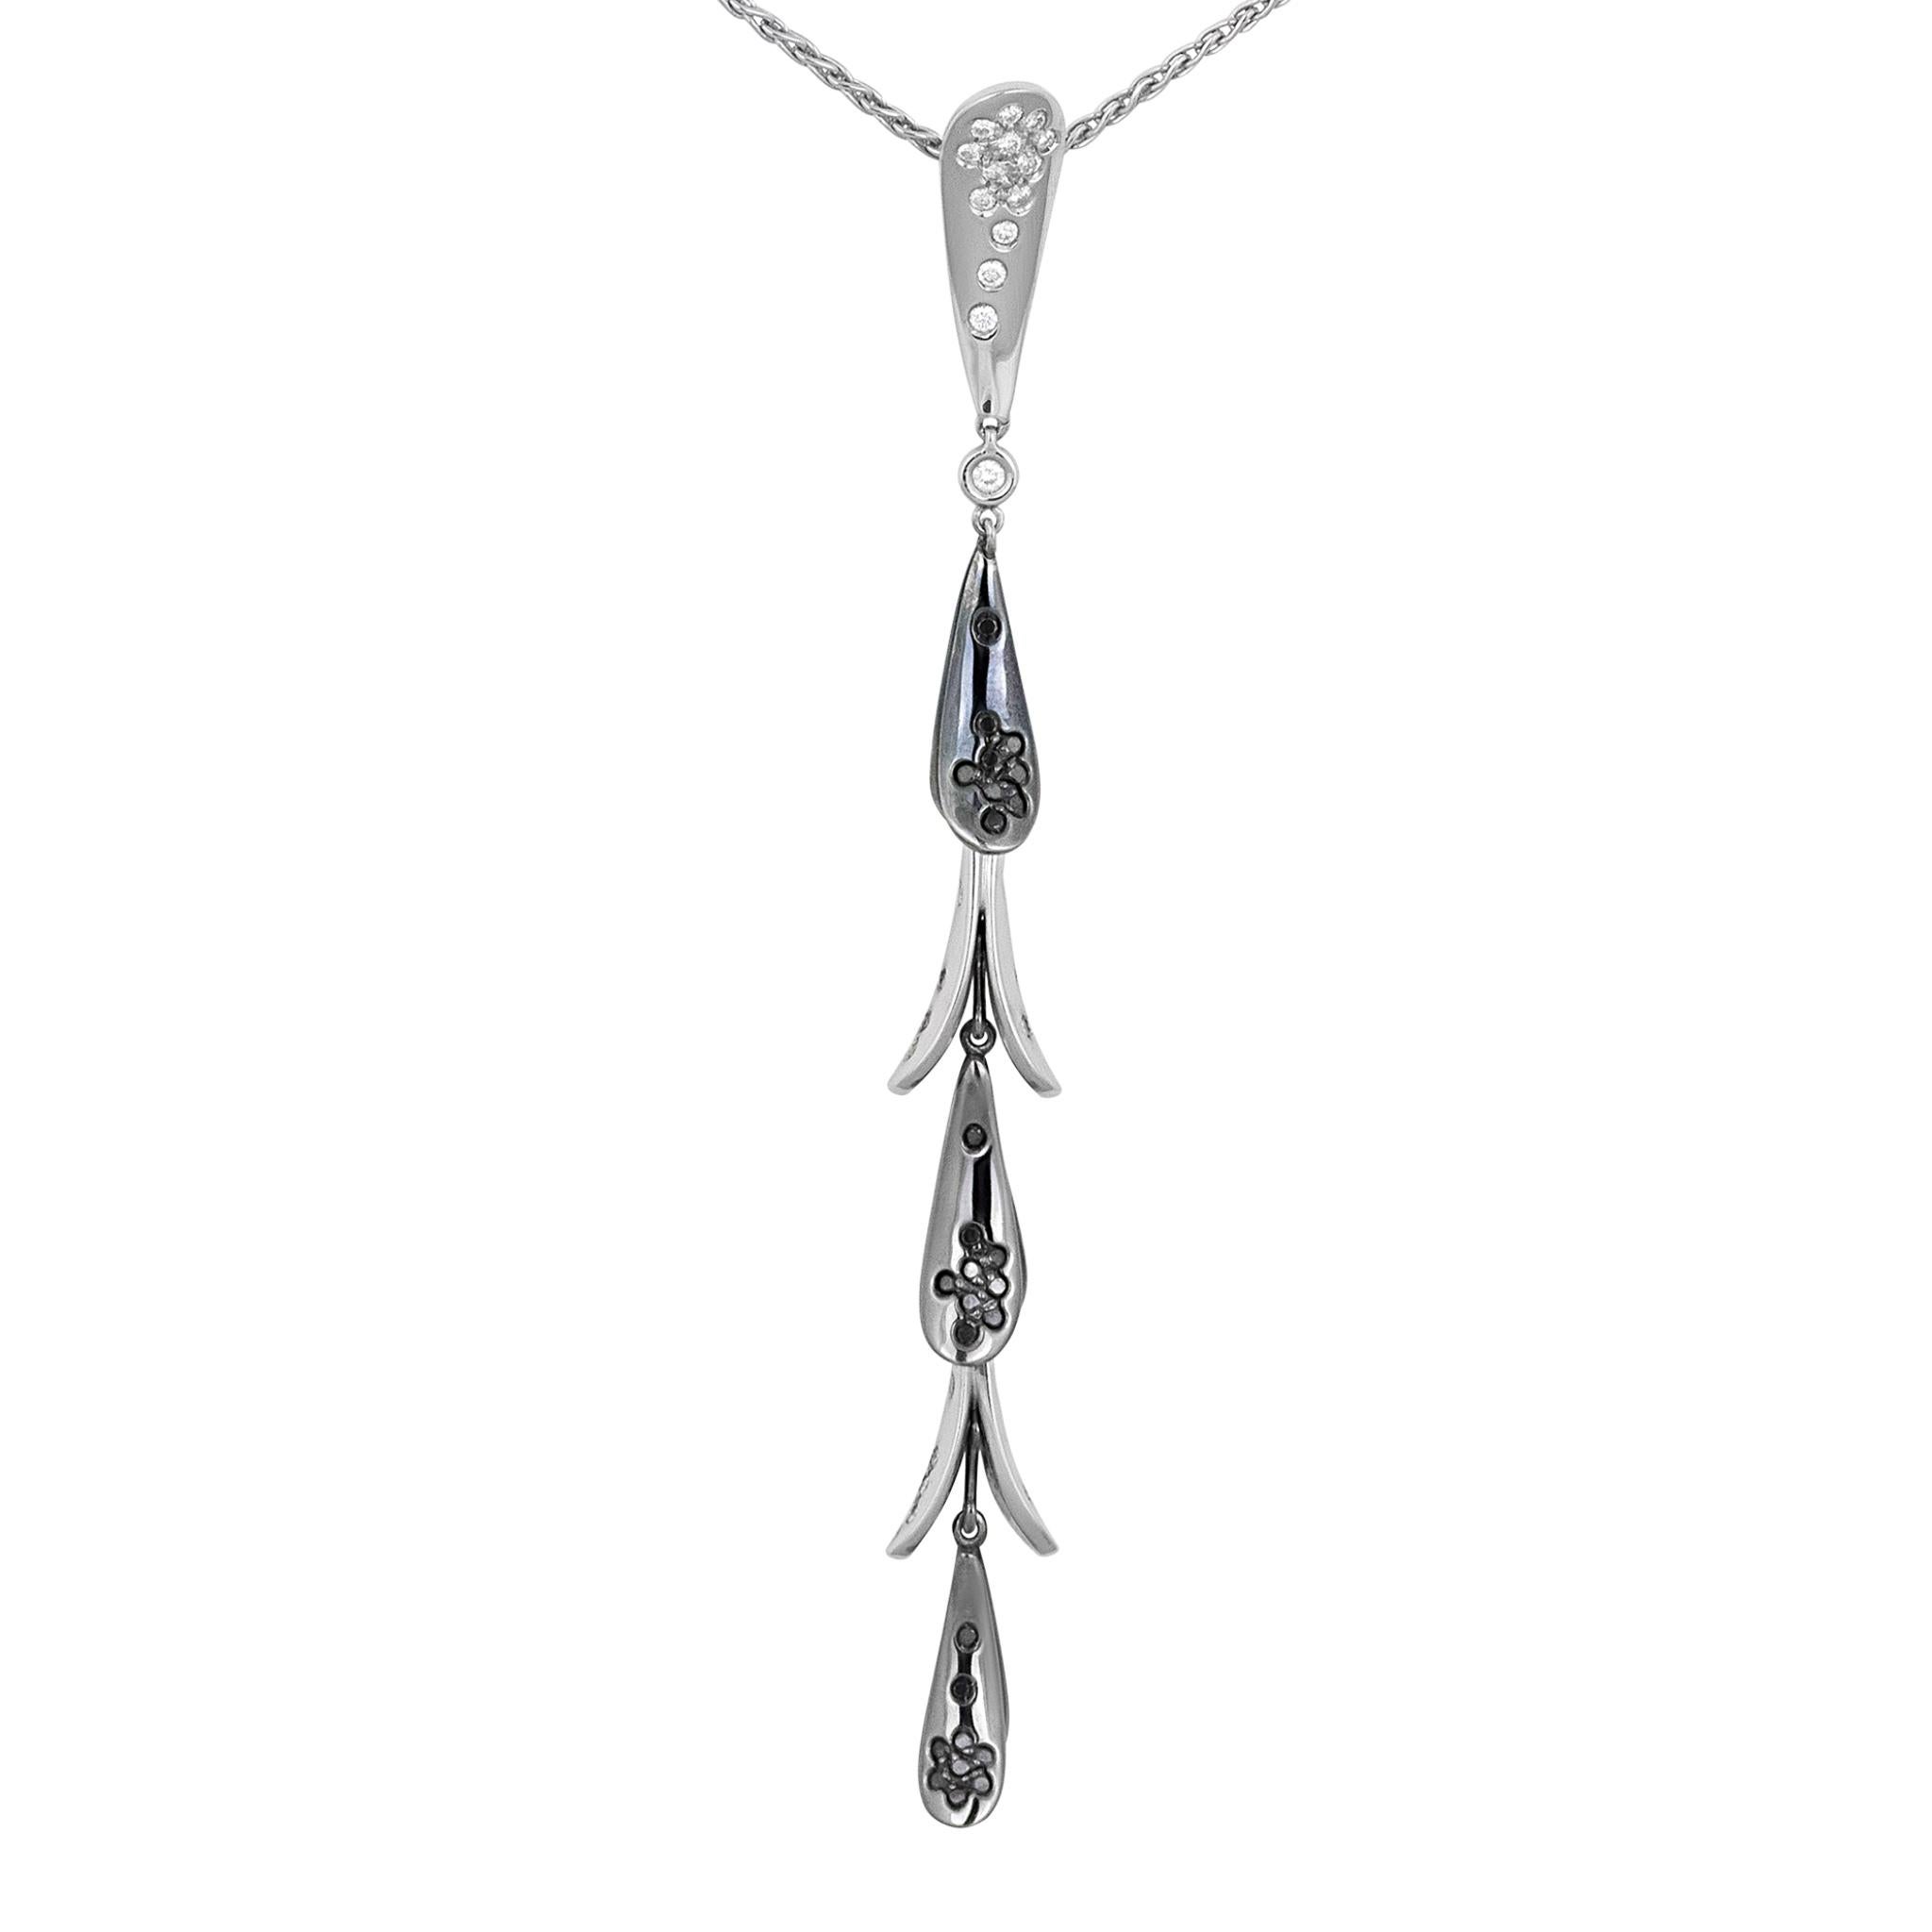 IO SI by Stefan Hafner Necklace
18K White Gold
Diamond: 1.72ctw
Retail price: $10,835.00
SKU: BLU01951
